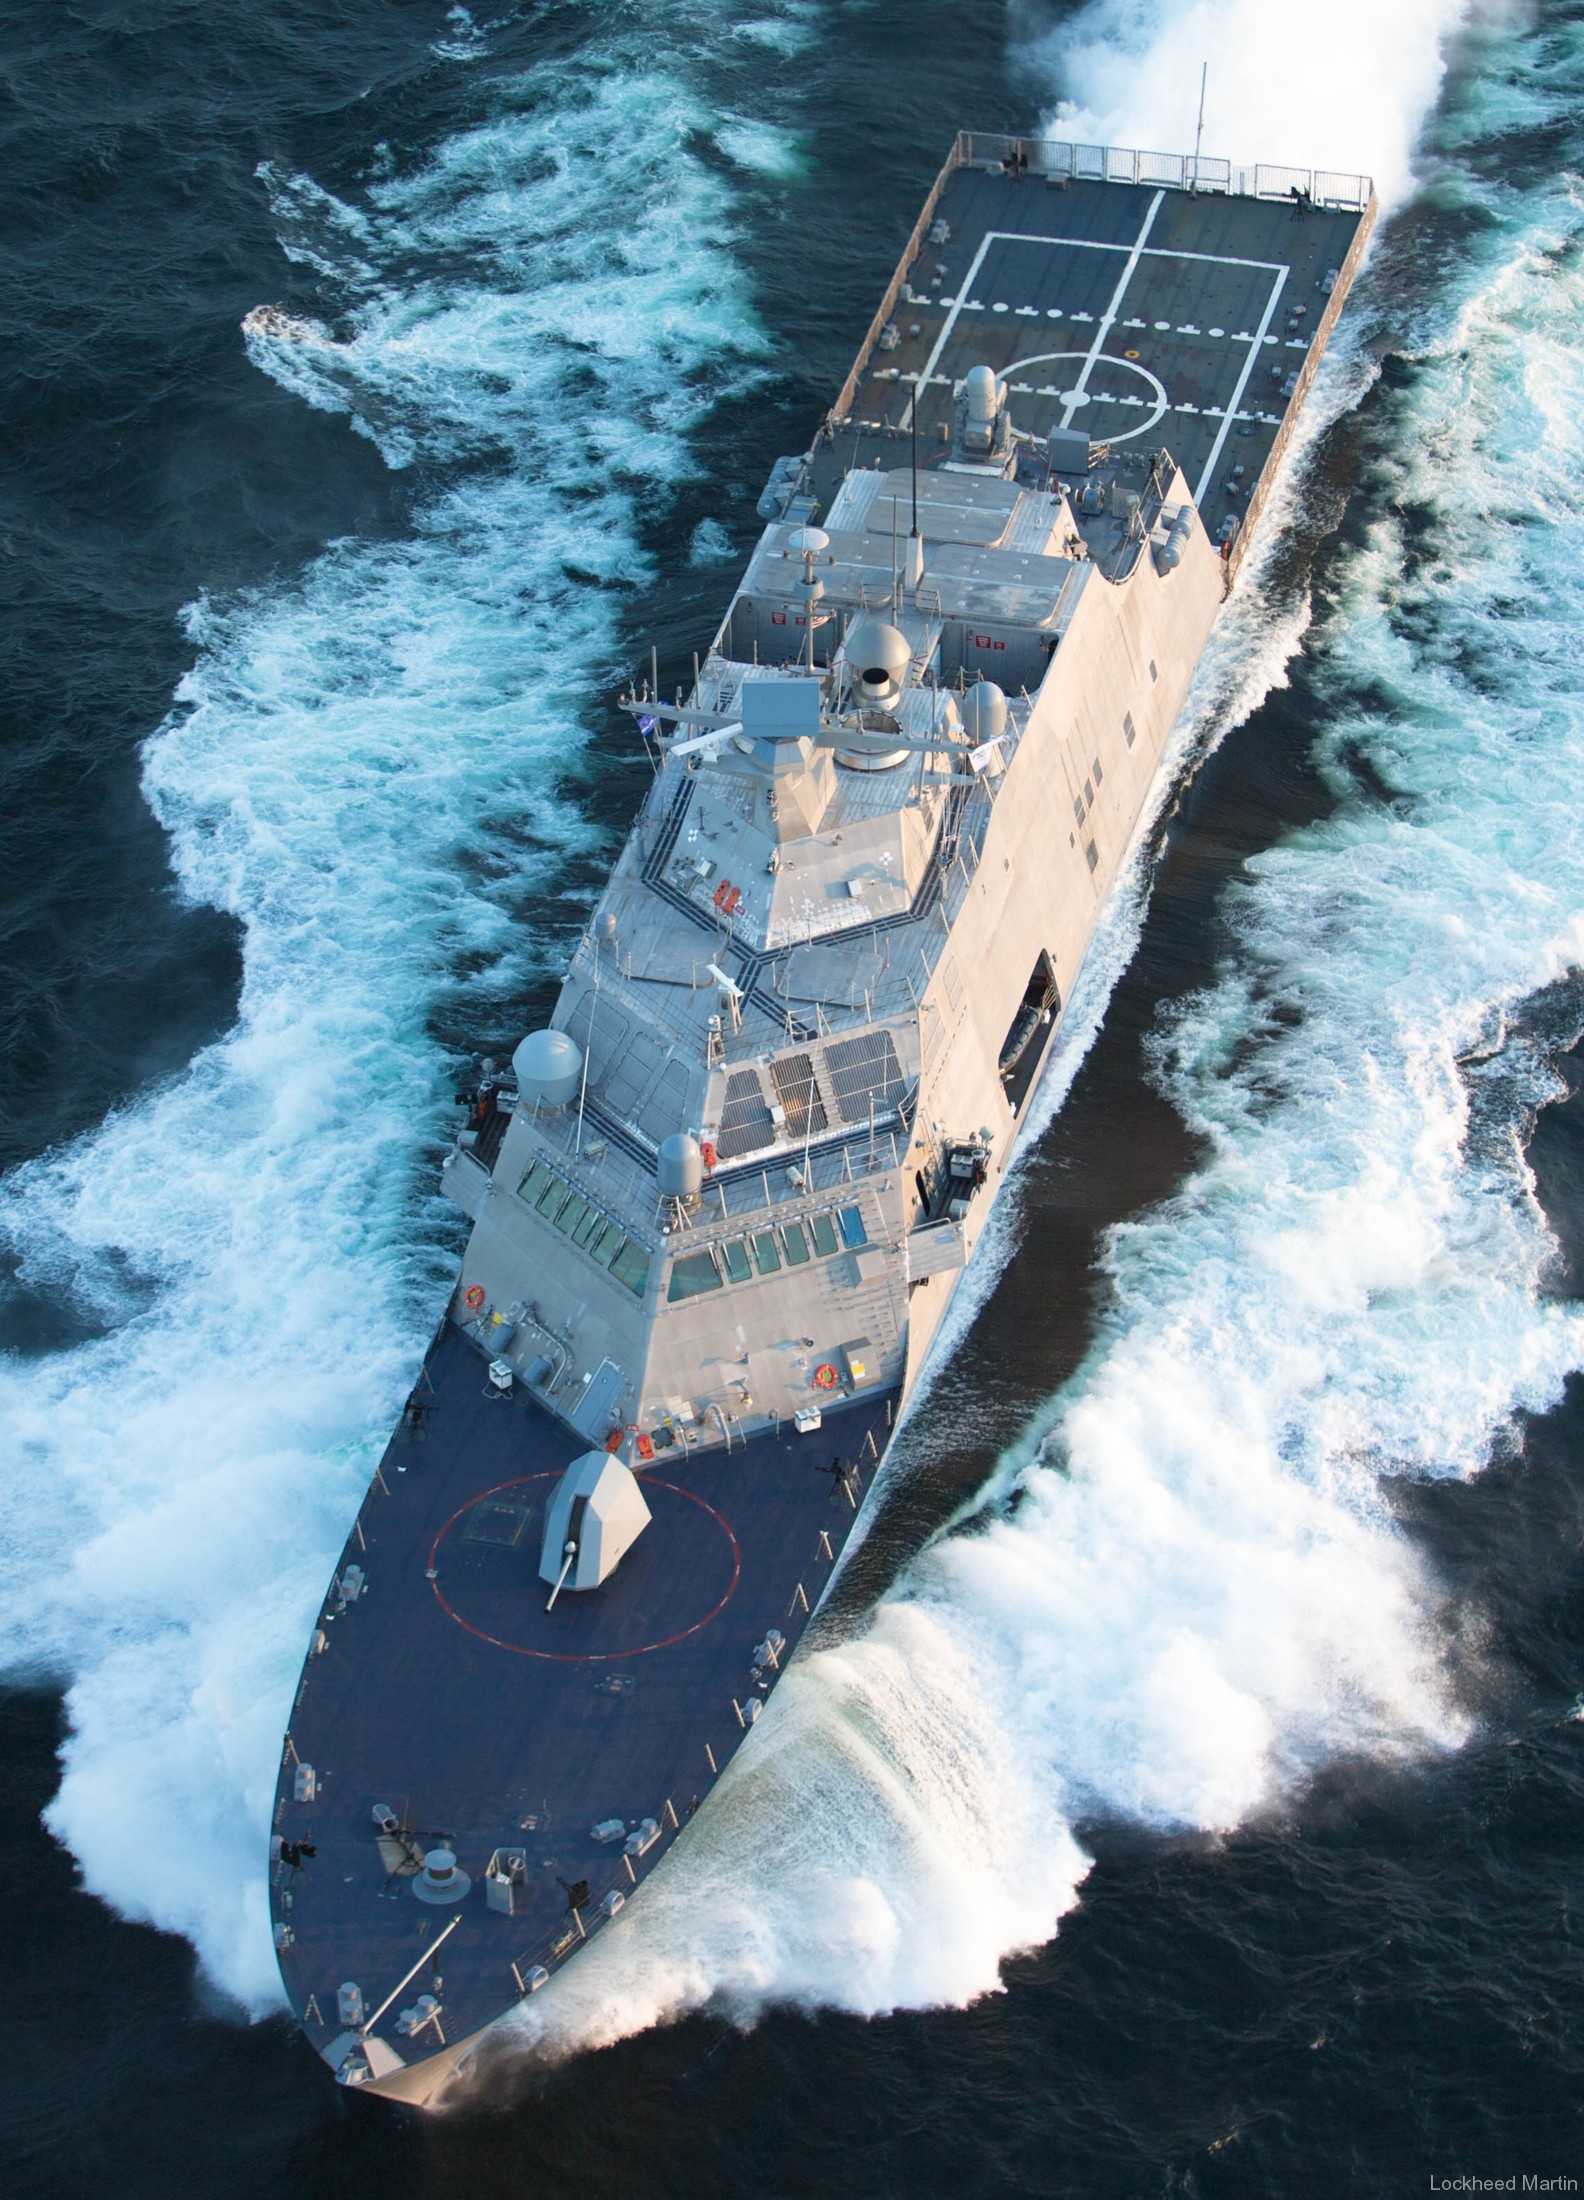 lcs-21 uss minneapolis saint paul freedom class littoral combat ship us navy 04